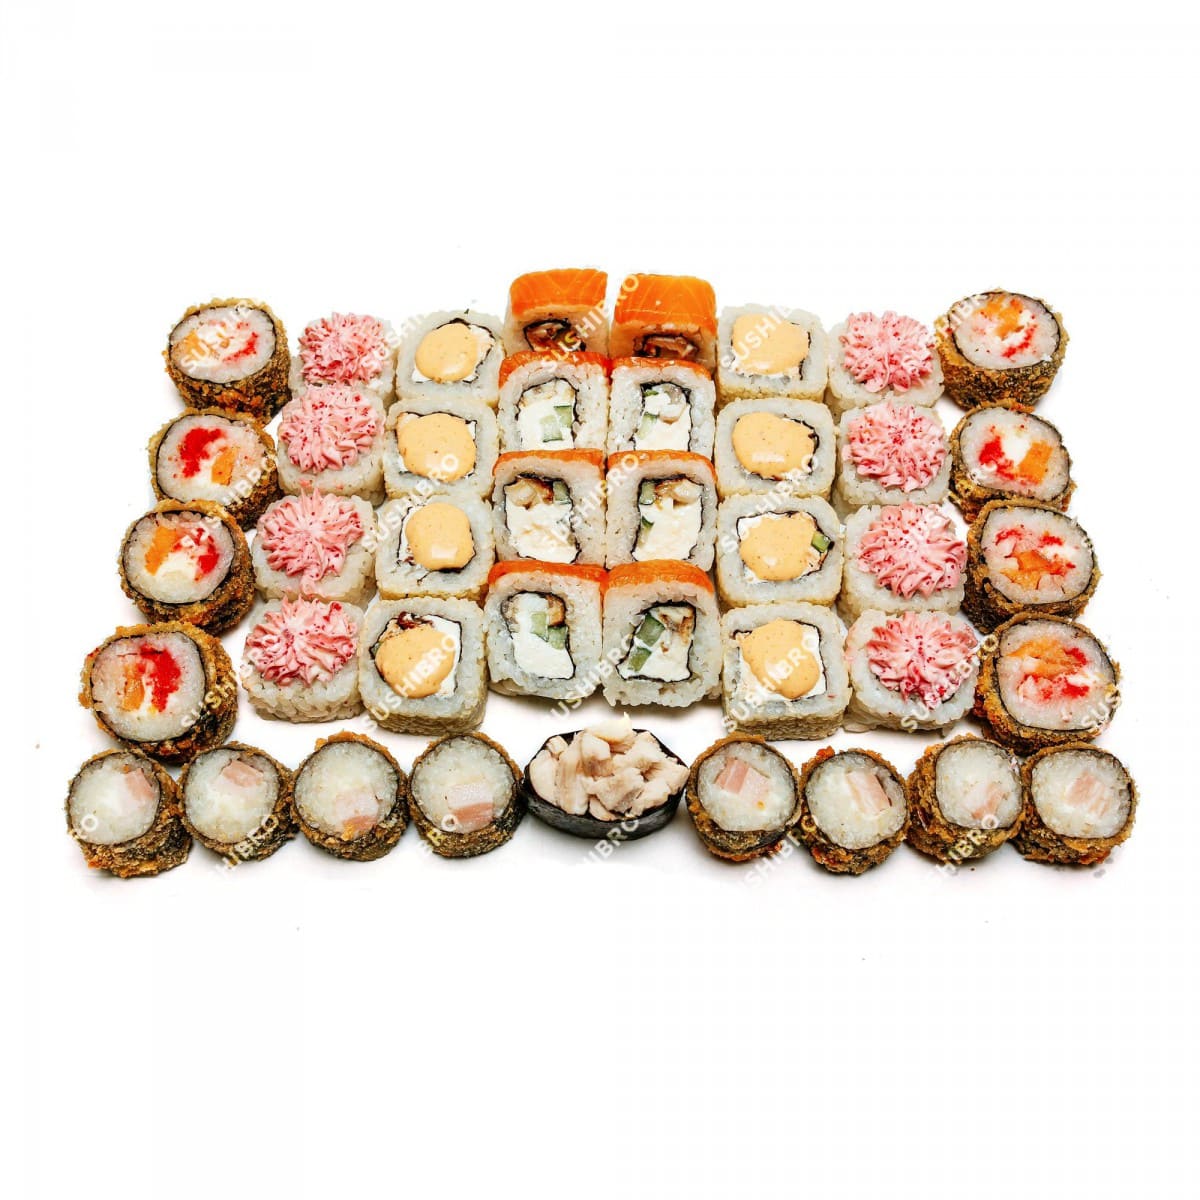 Заказать суши в махачкале фото 17